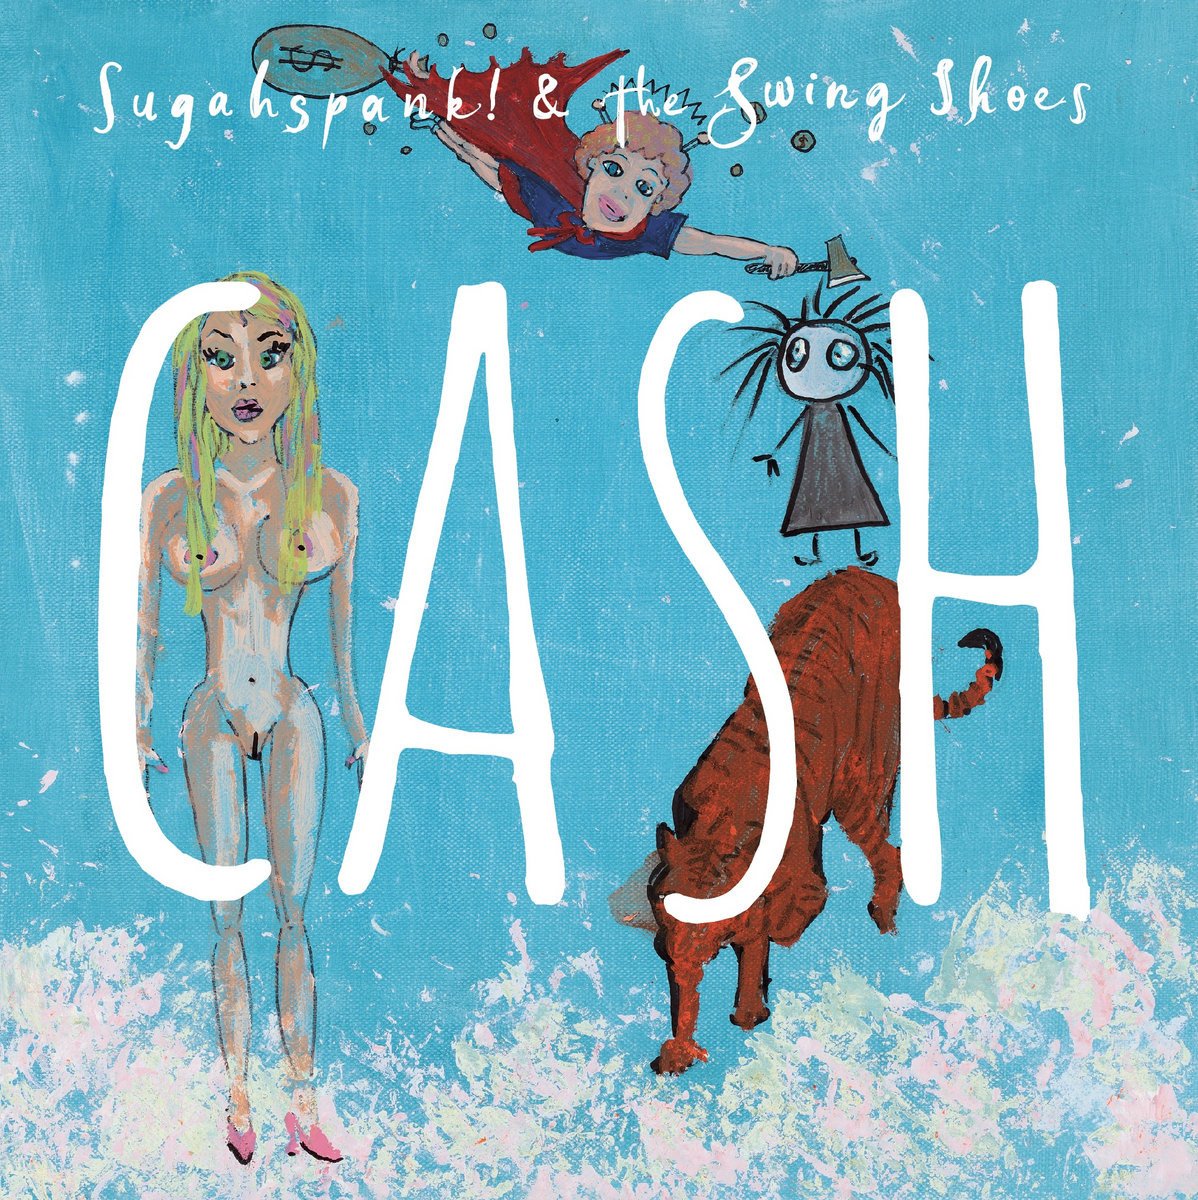 CD Shop - SUGAHSPANK! & THE SWING S CASH